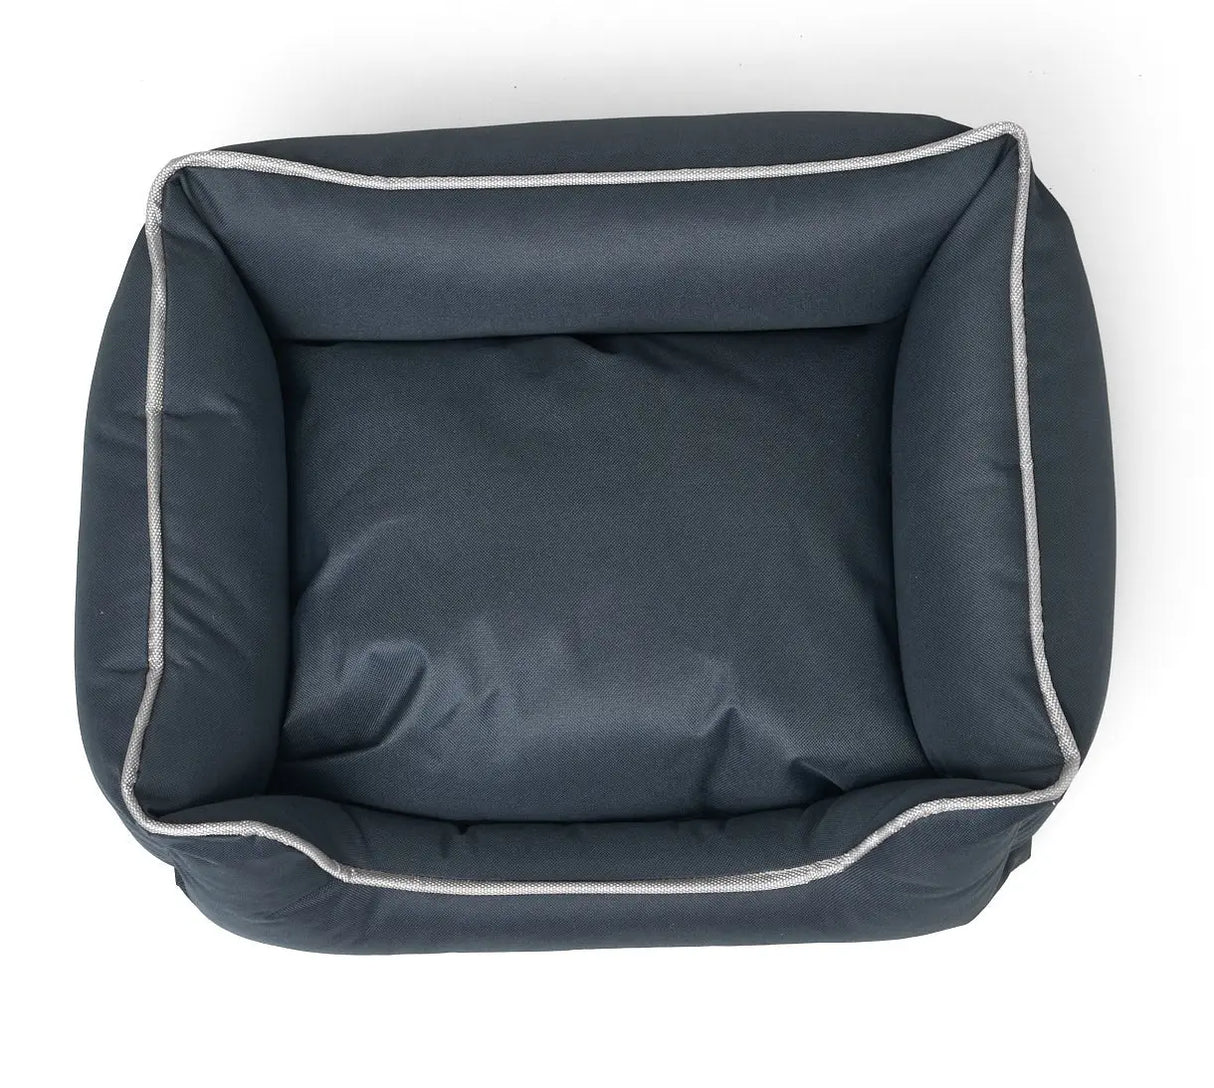 Bora Pet Bed | Inner cushion | Non-Slip Bottom | Stylish Design | Easy Maintenance| Dark Gray | Size S 30x20x14cm (LxWxH) | Cats and dogs